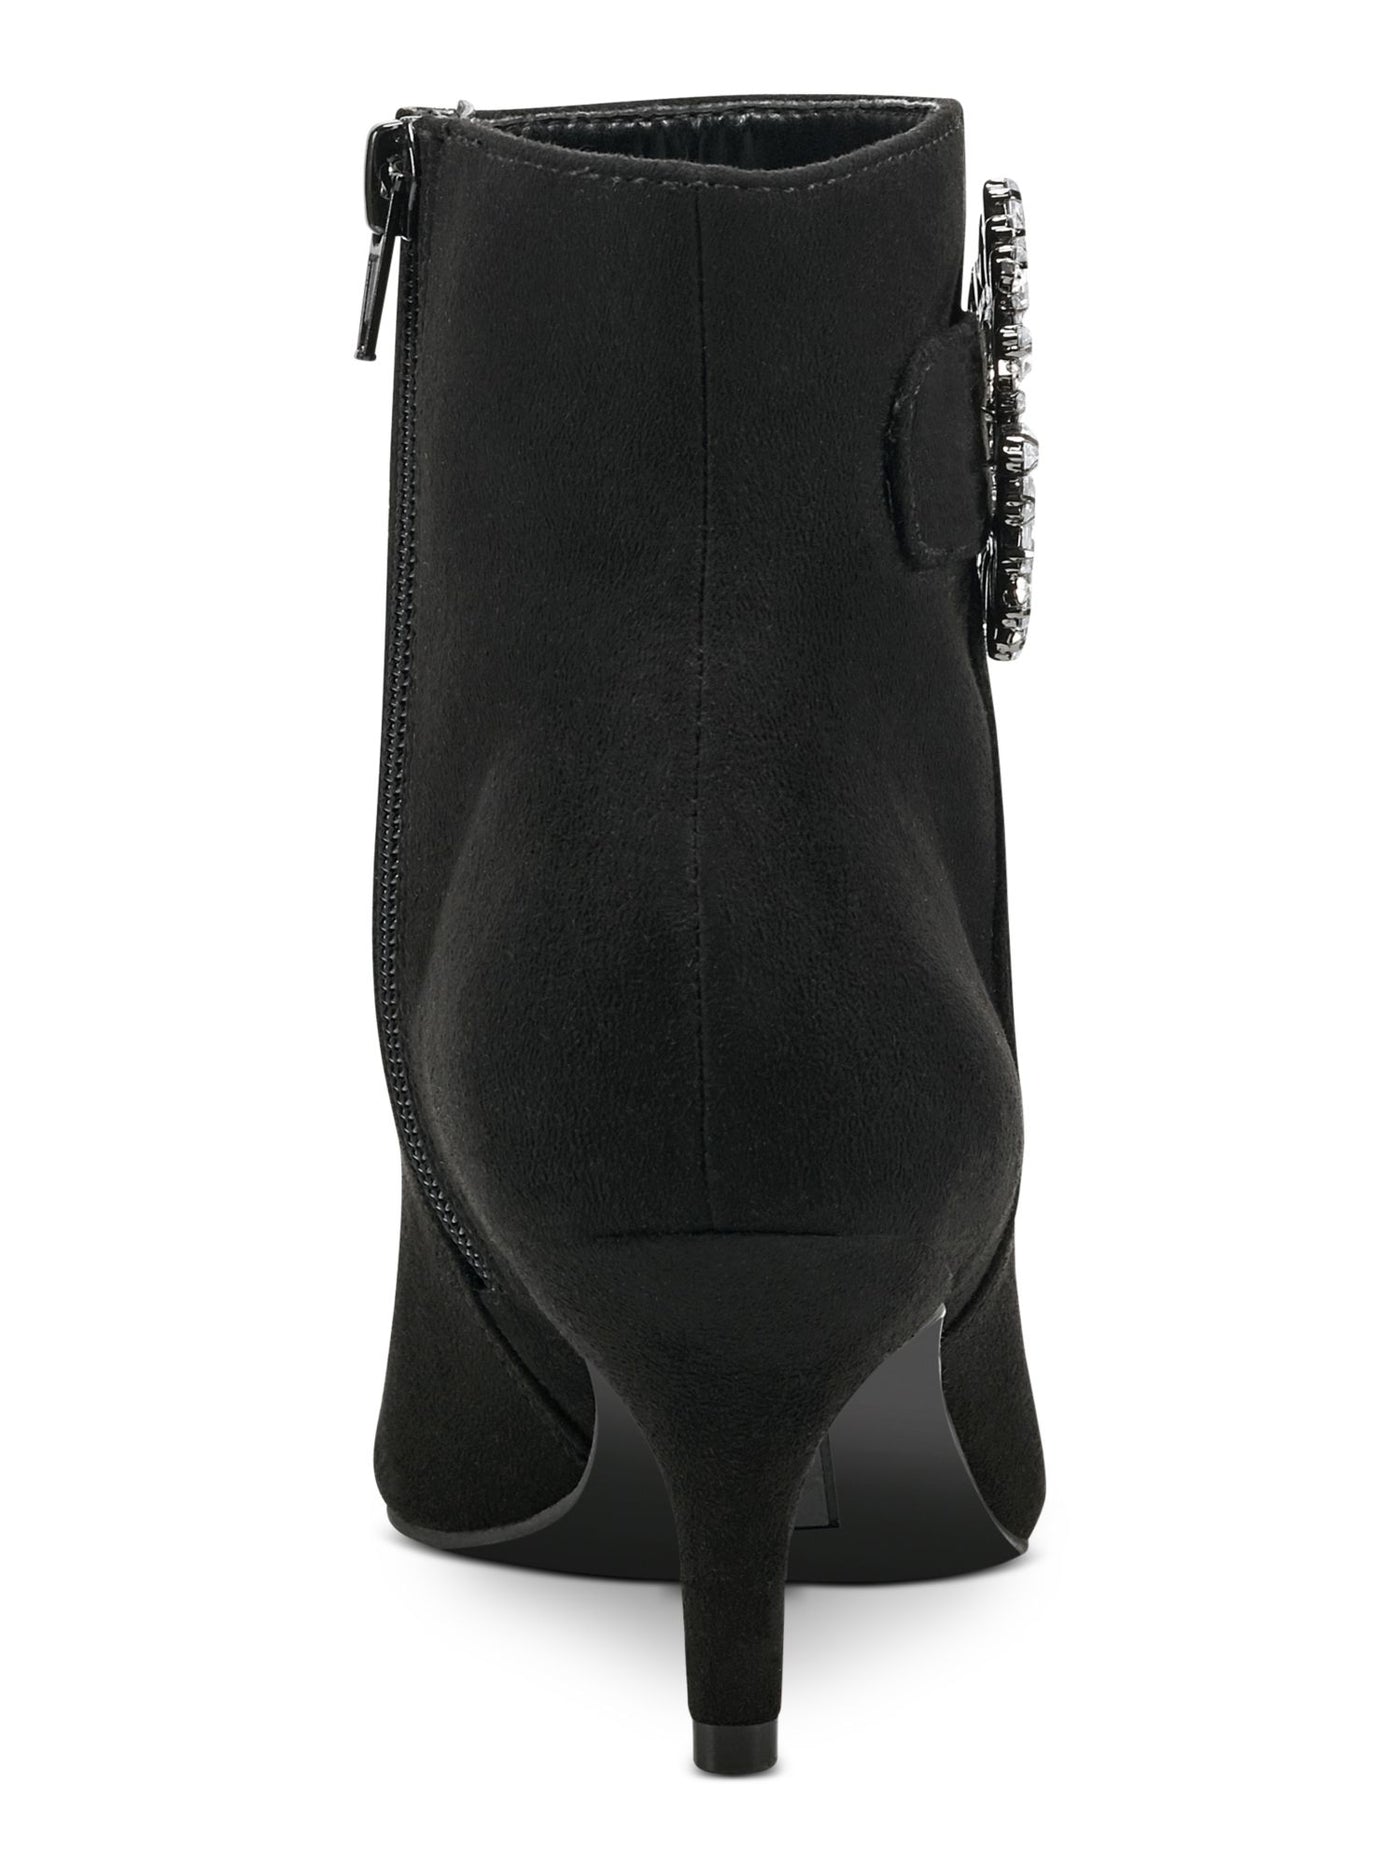 CHARTER CLUB Womens Black Embellished Comfort Crafta Pointed Toe Kitten Heel Zip-Up Booties 6 M